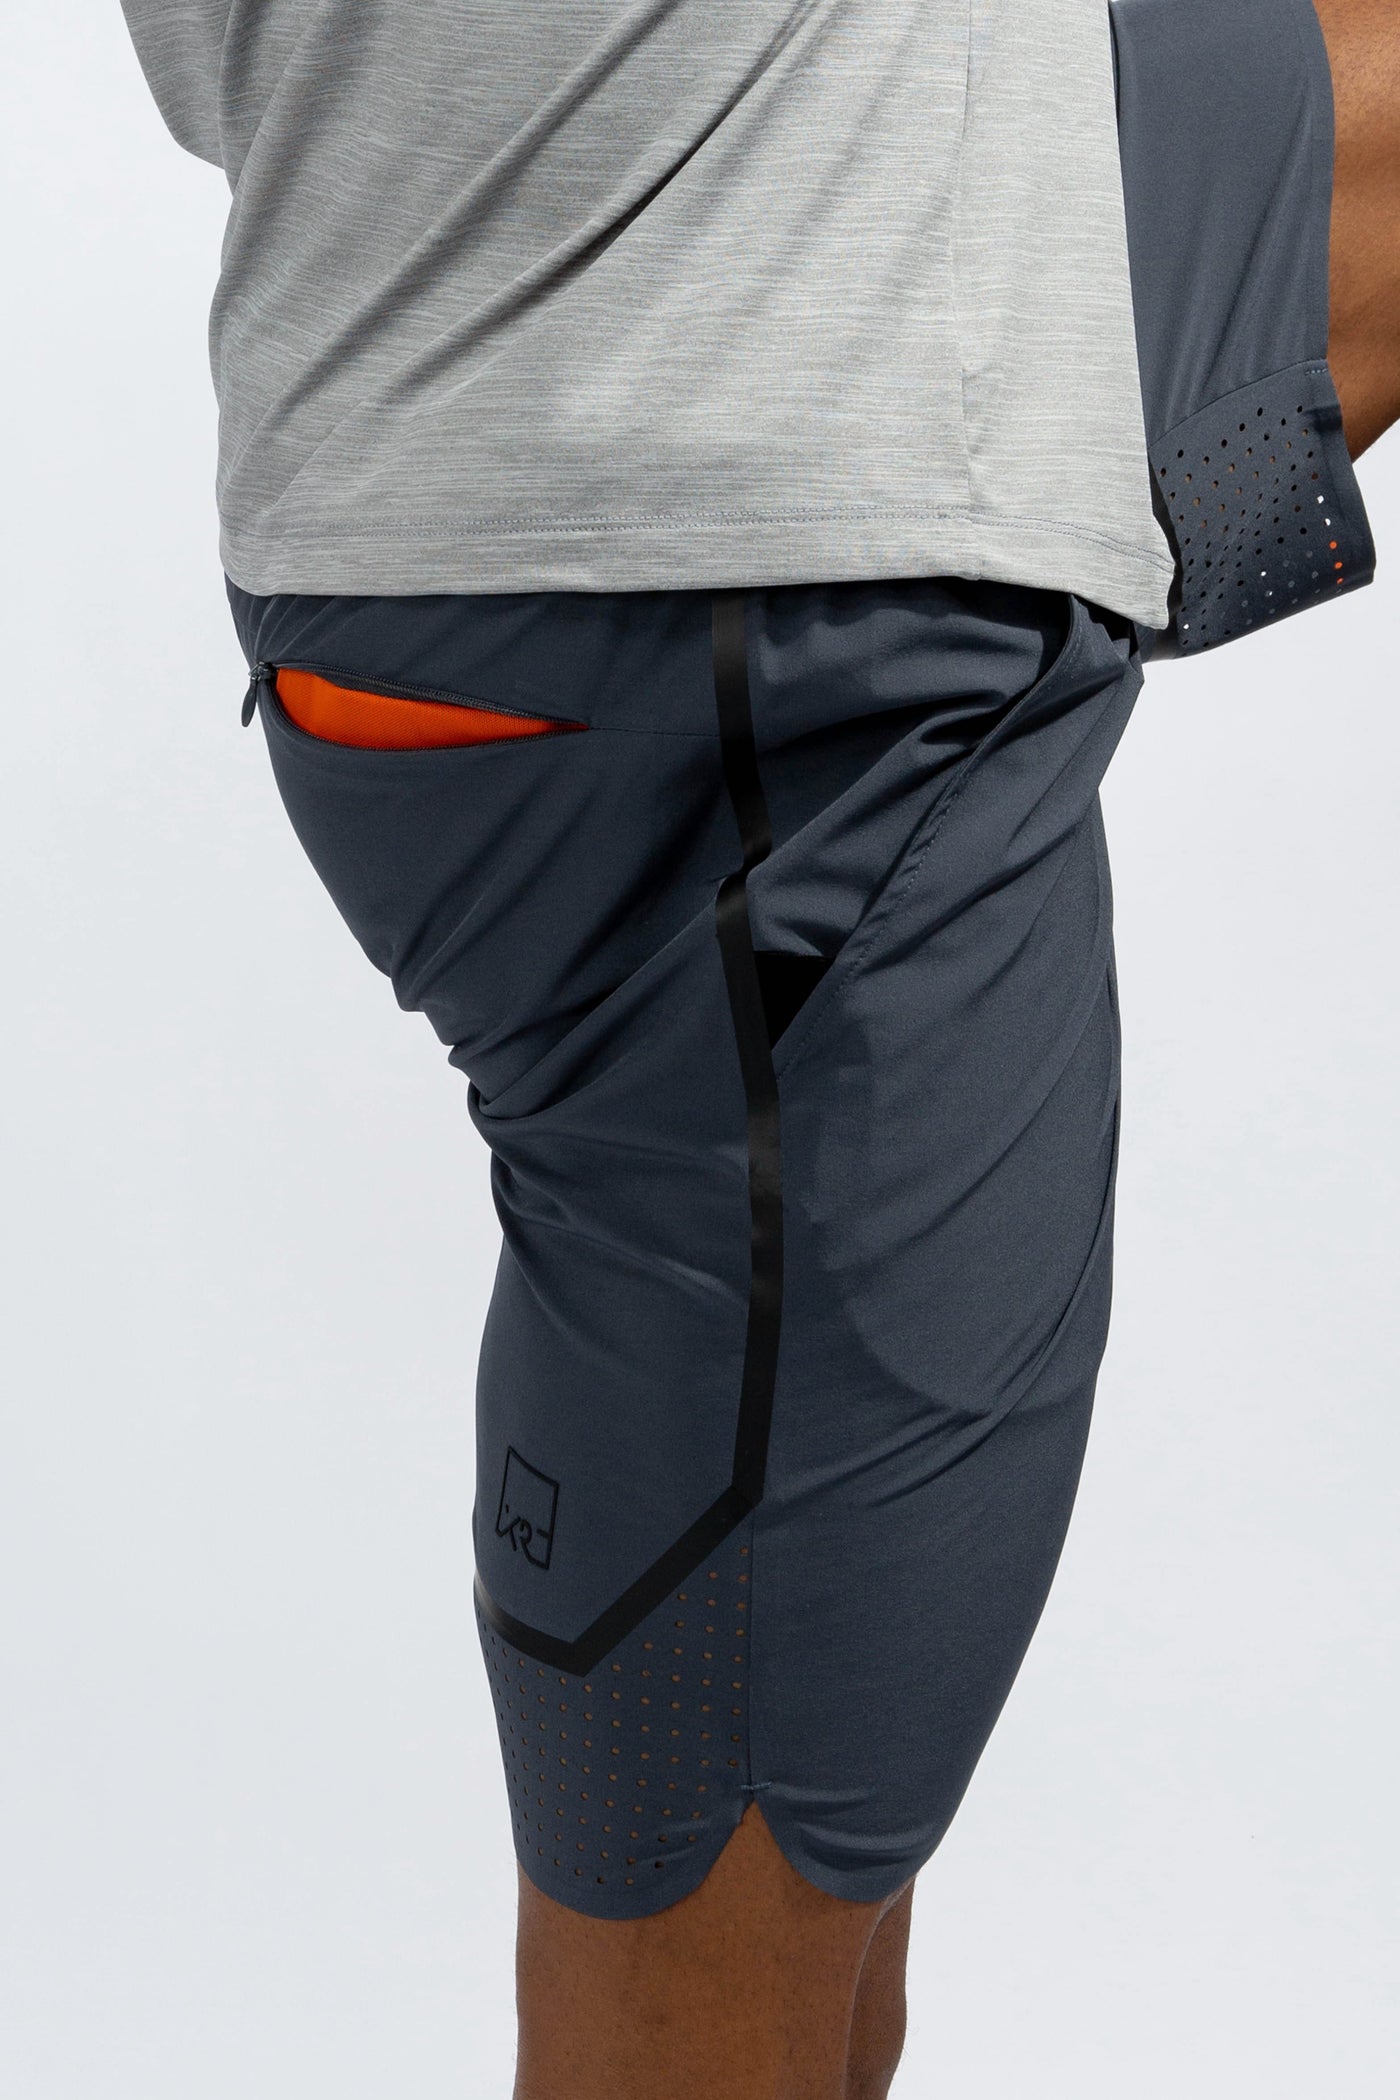 XRT Grey gym shorts for men